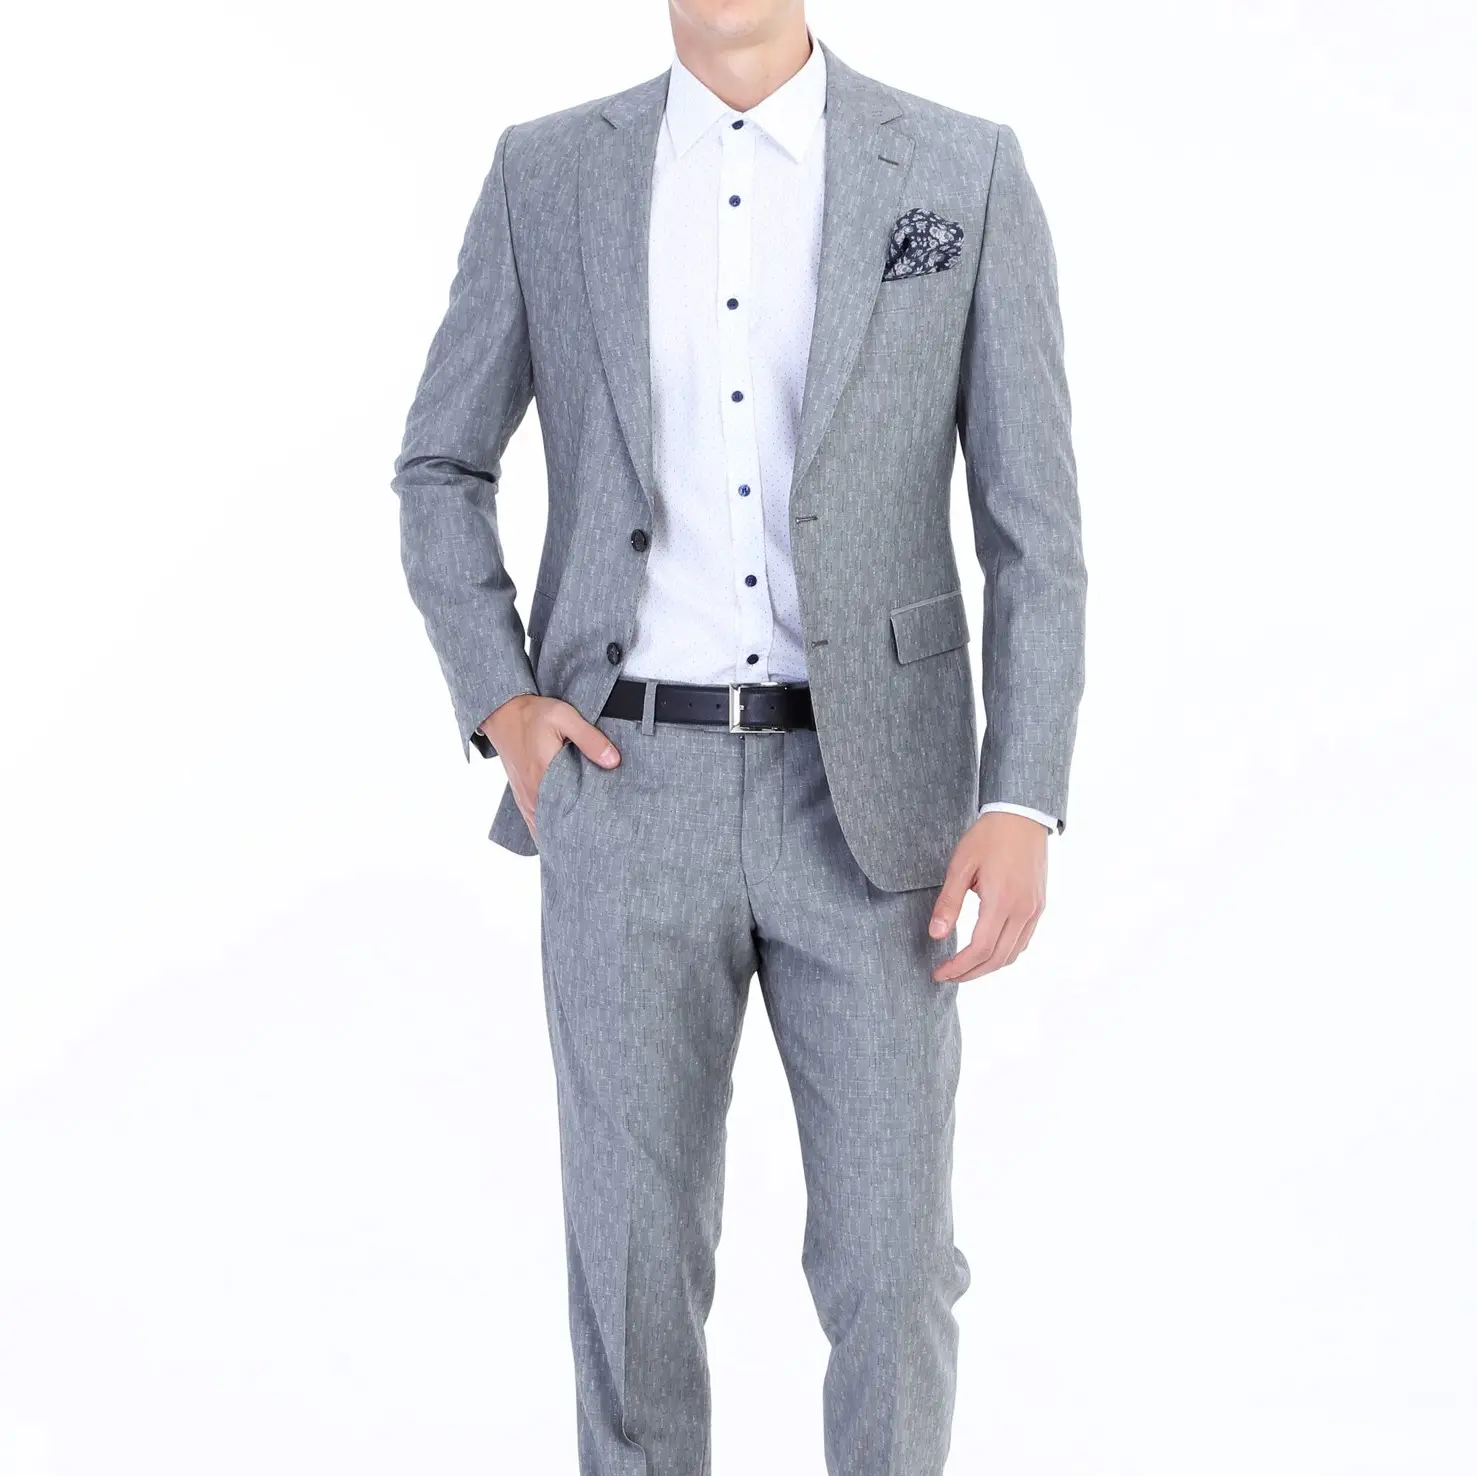 Kigili Turkish Luxury Fashion High Quality Premium Business Regular Fit Patterned Light Gray Woolen Men's Suit